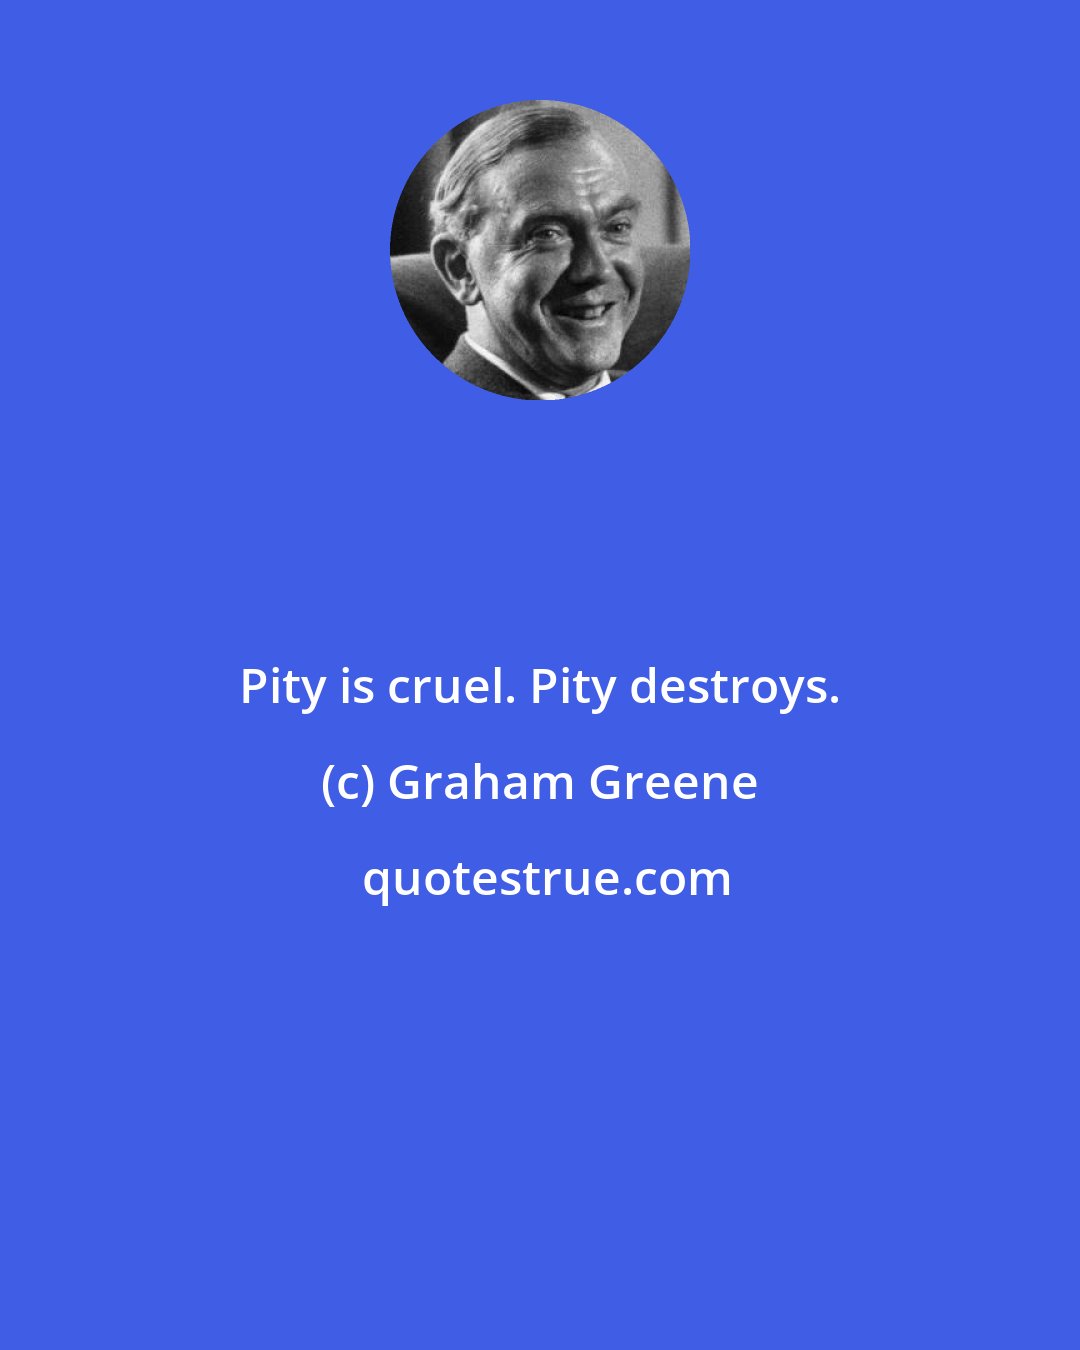 Graham Greene: Pity is cruel. Pity destroys.